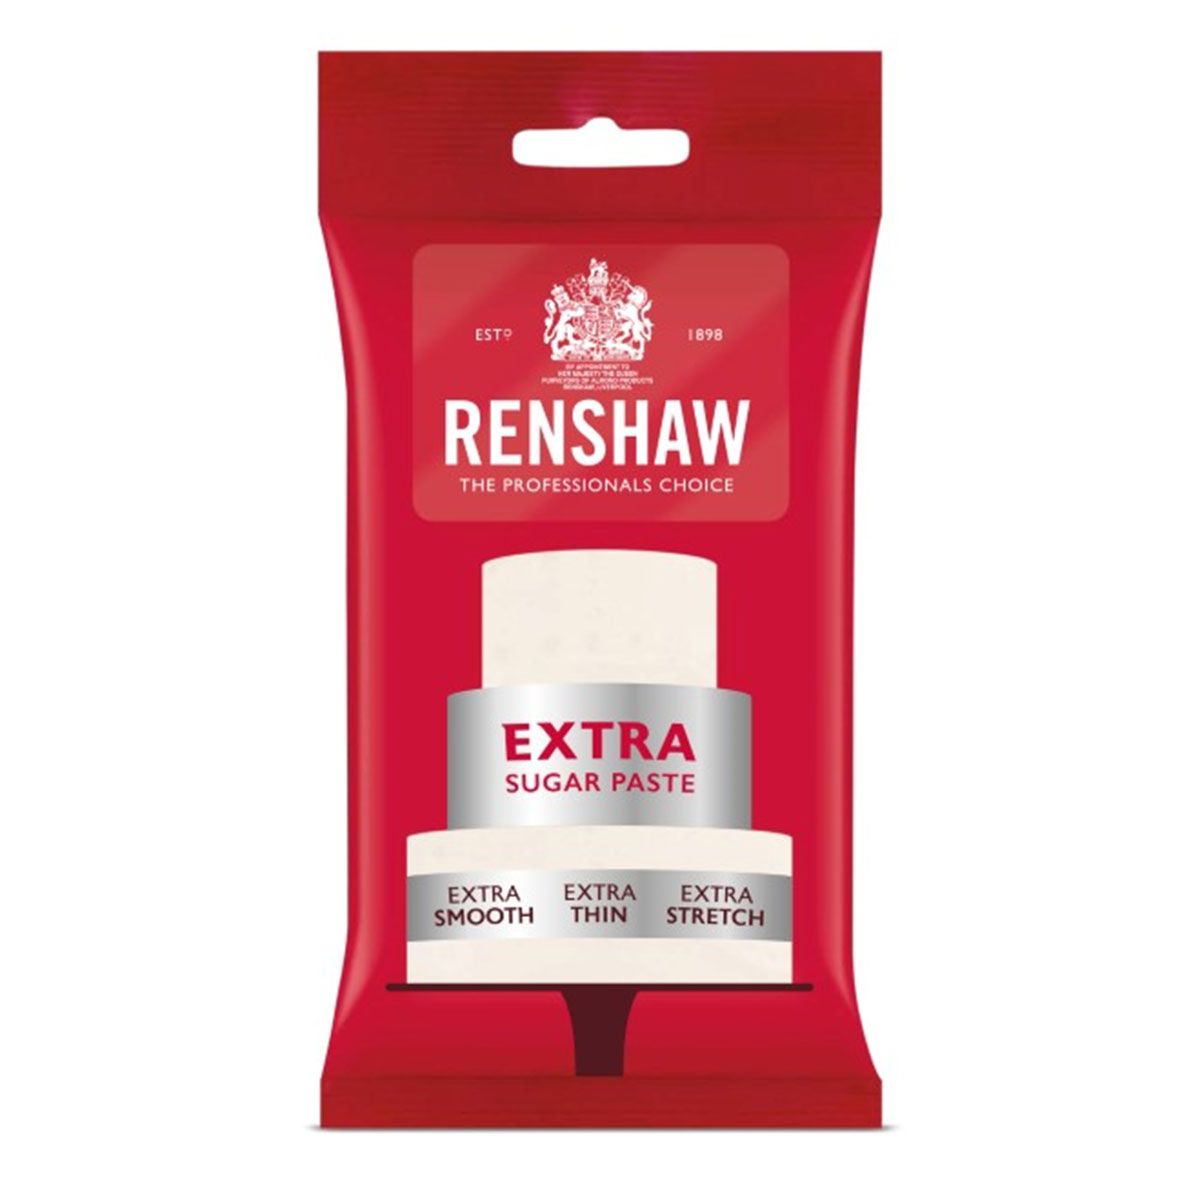 Renshaw Extra bílý rolovaný fondant - Extra White 250 g